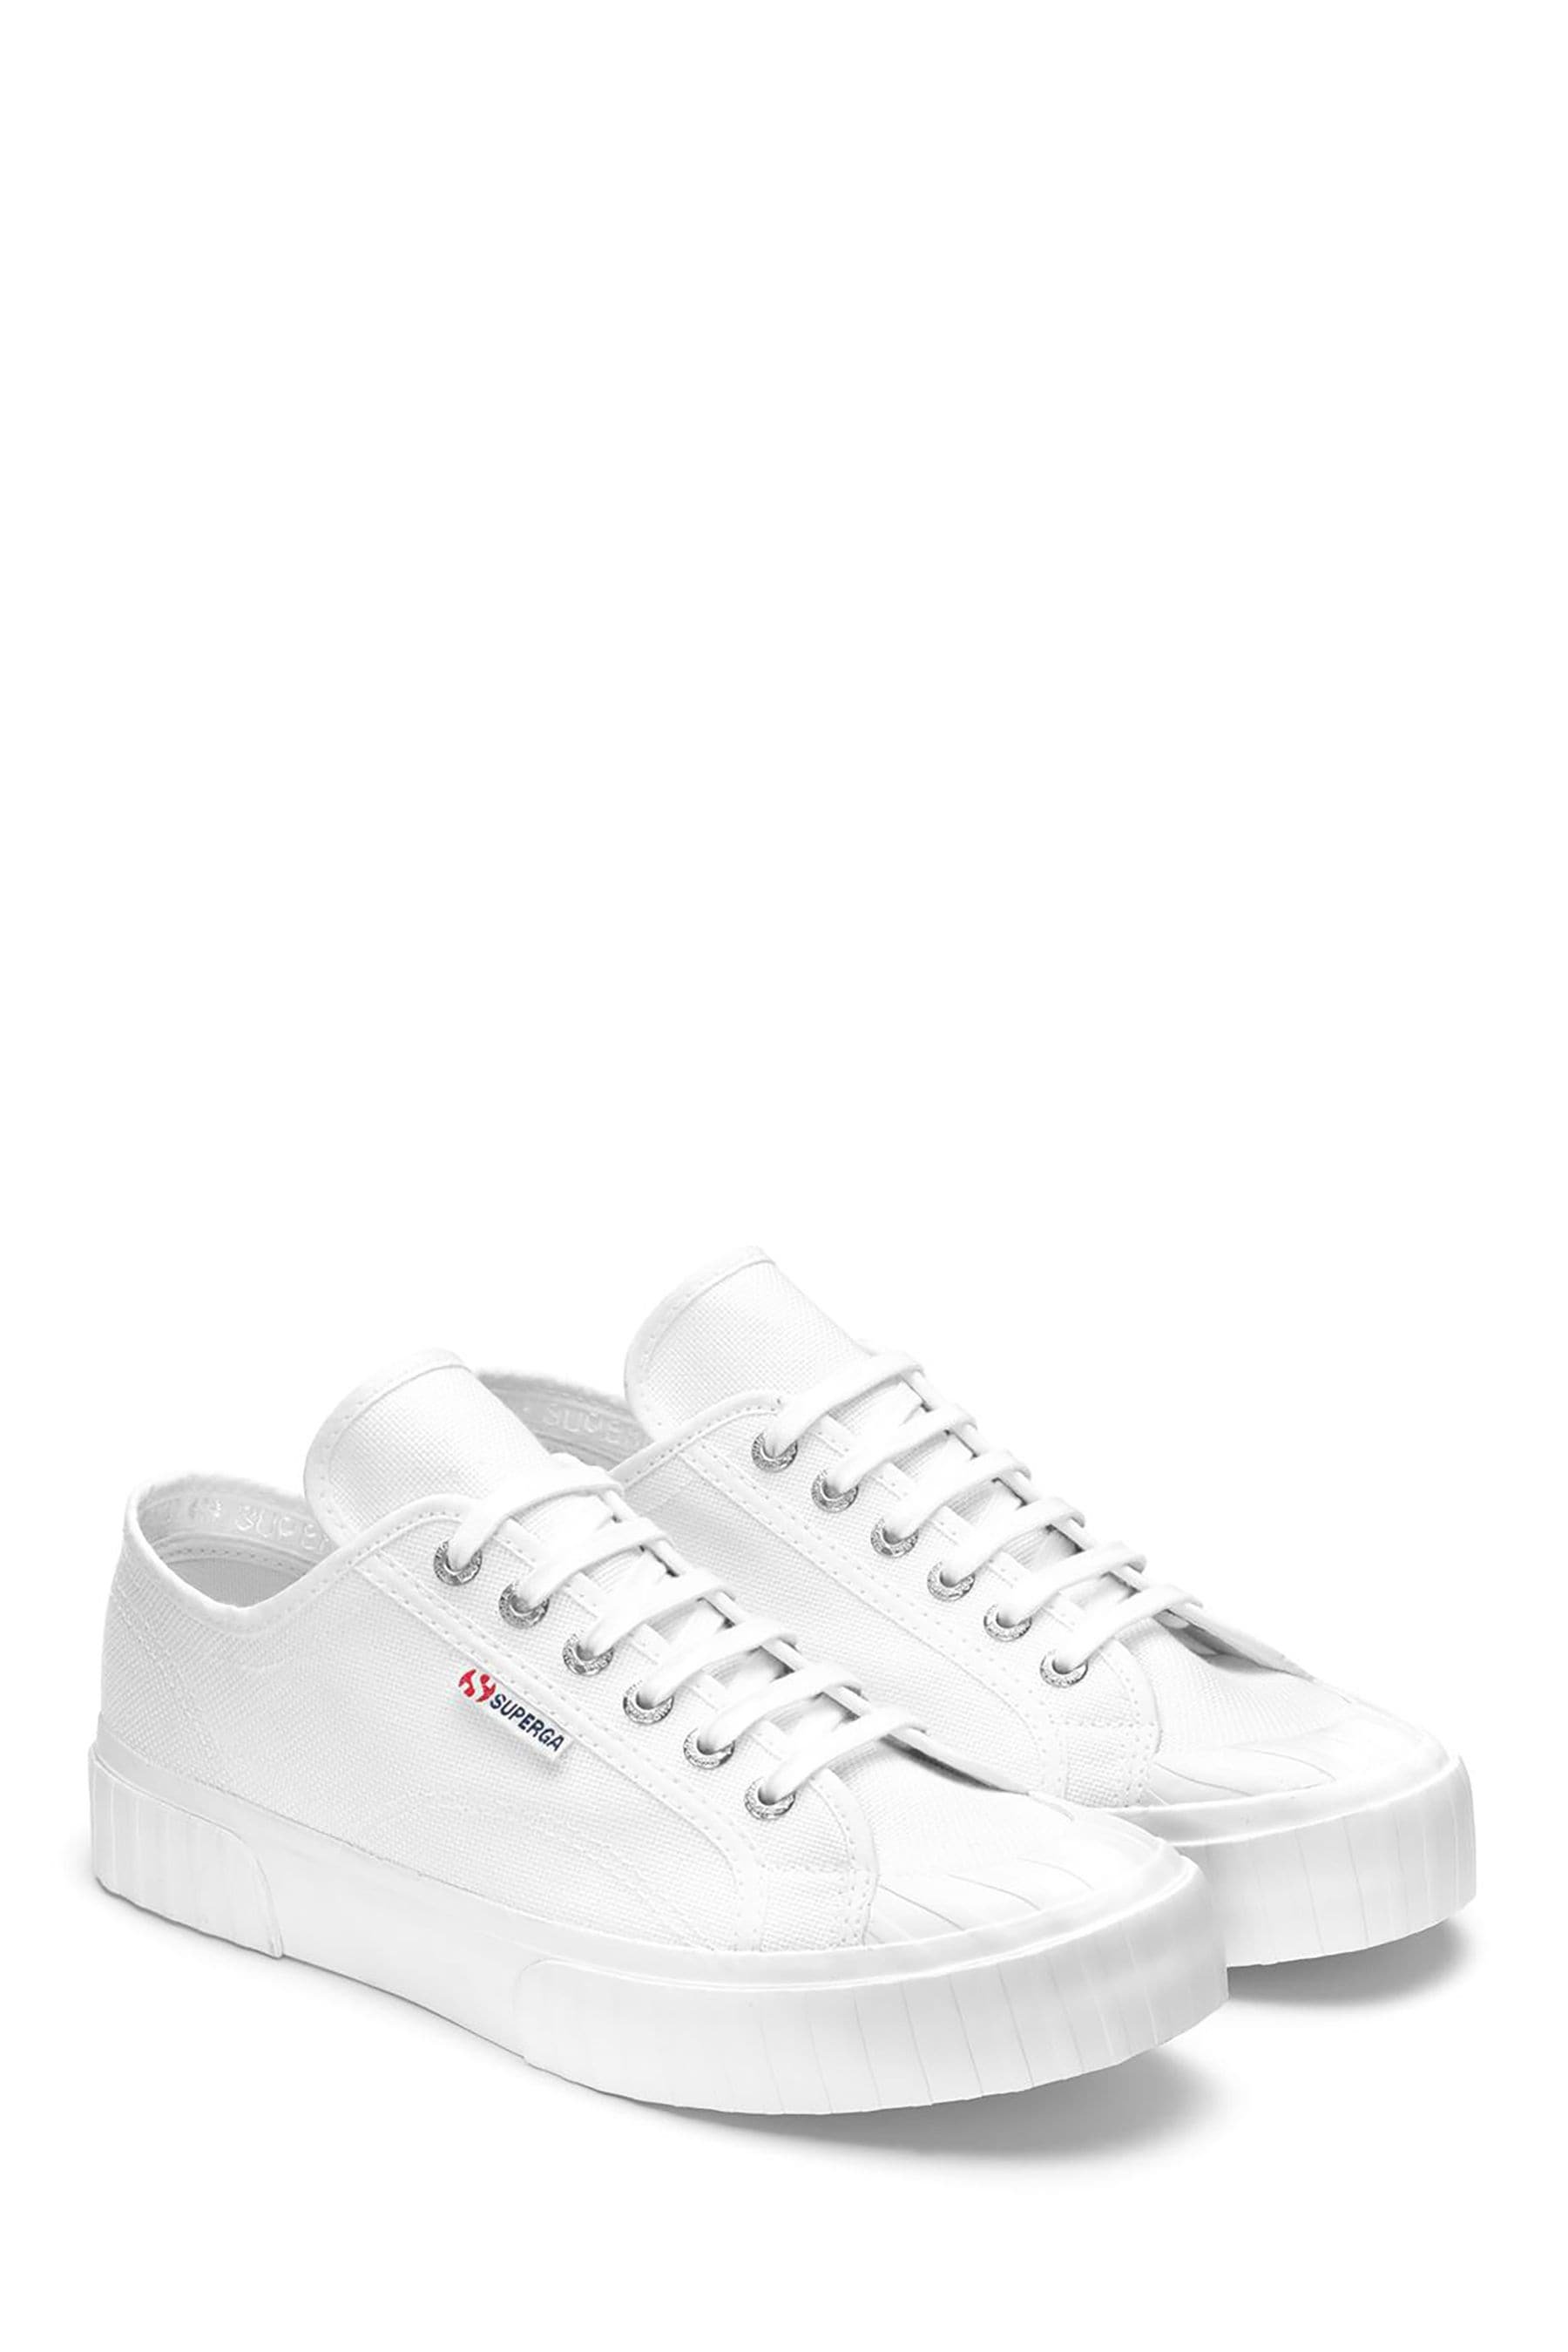 Superga 2630 Cotu Shoes in White.jpg